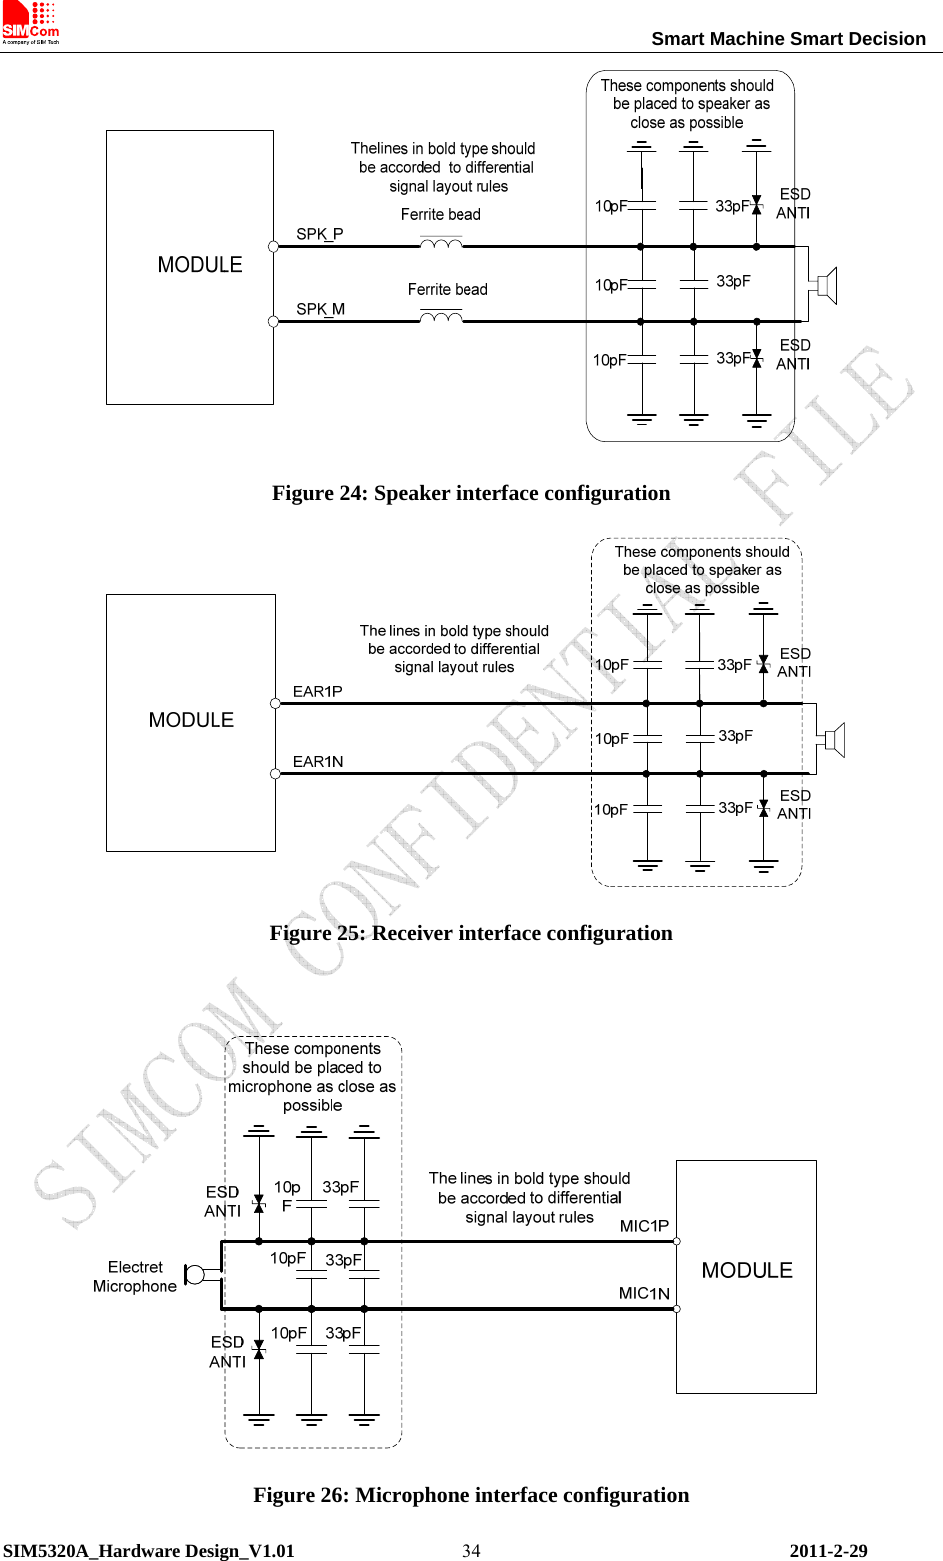                                                                Smart Machine Smart Decision SIM5320A_Hardware Design_V1.01   2011-2-29 34 Figure 24: Speaker interface configuration  Figure 25: Receiver interface configuration   Figure 26: Microphone interface configuration 